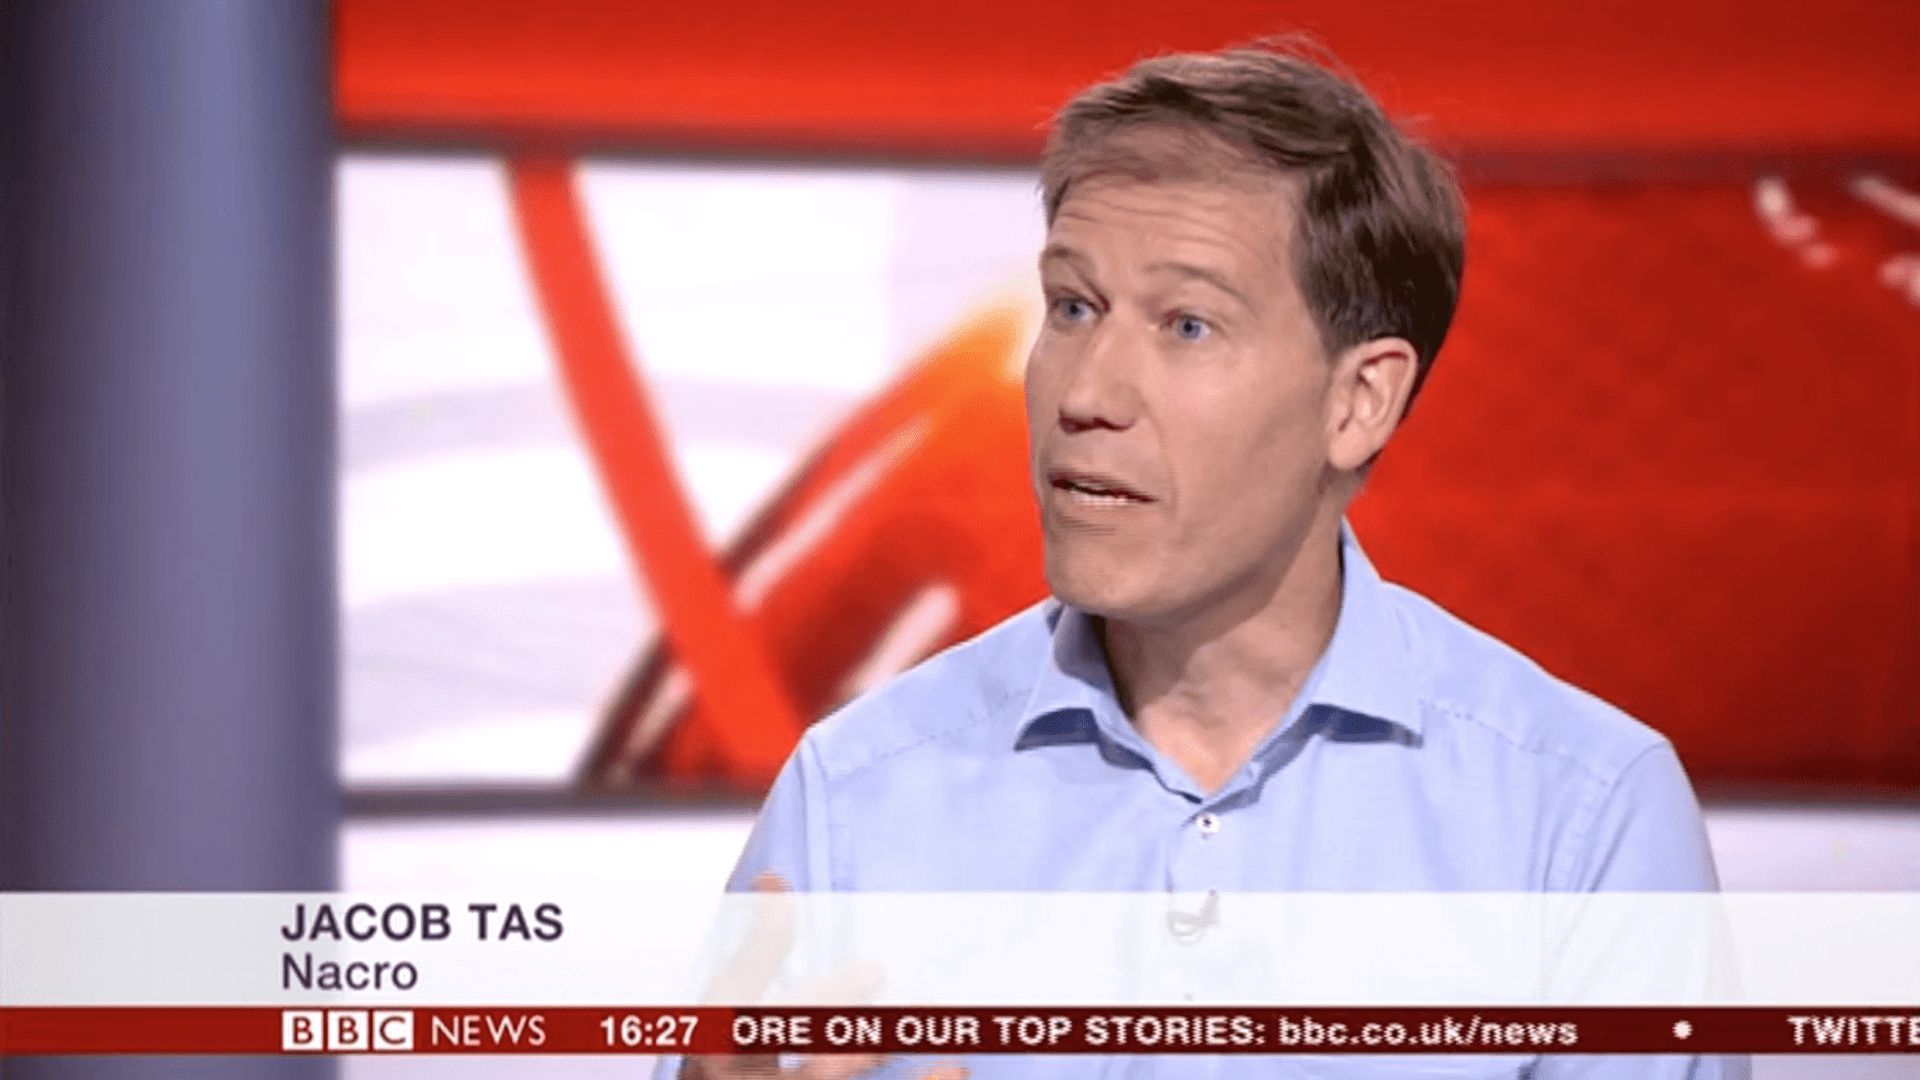 Nacro CEO Jacob Tas on BBC News